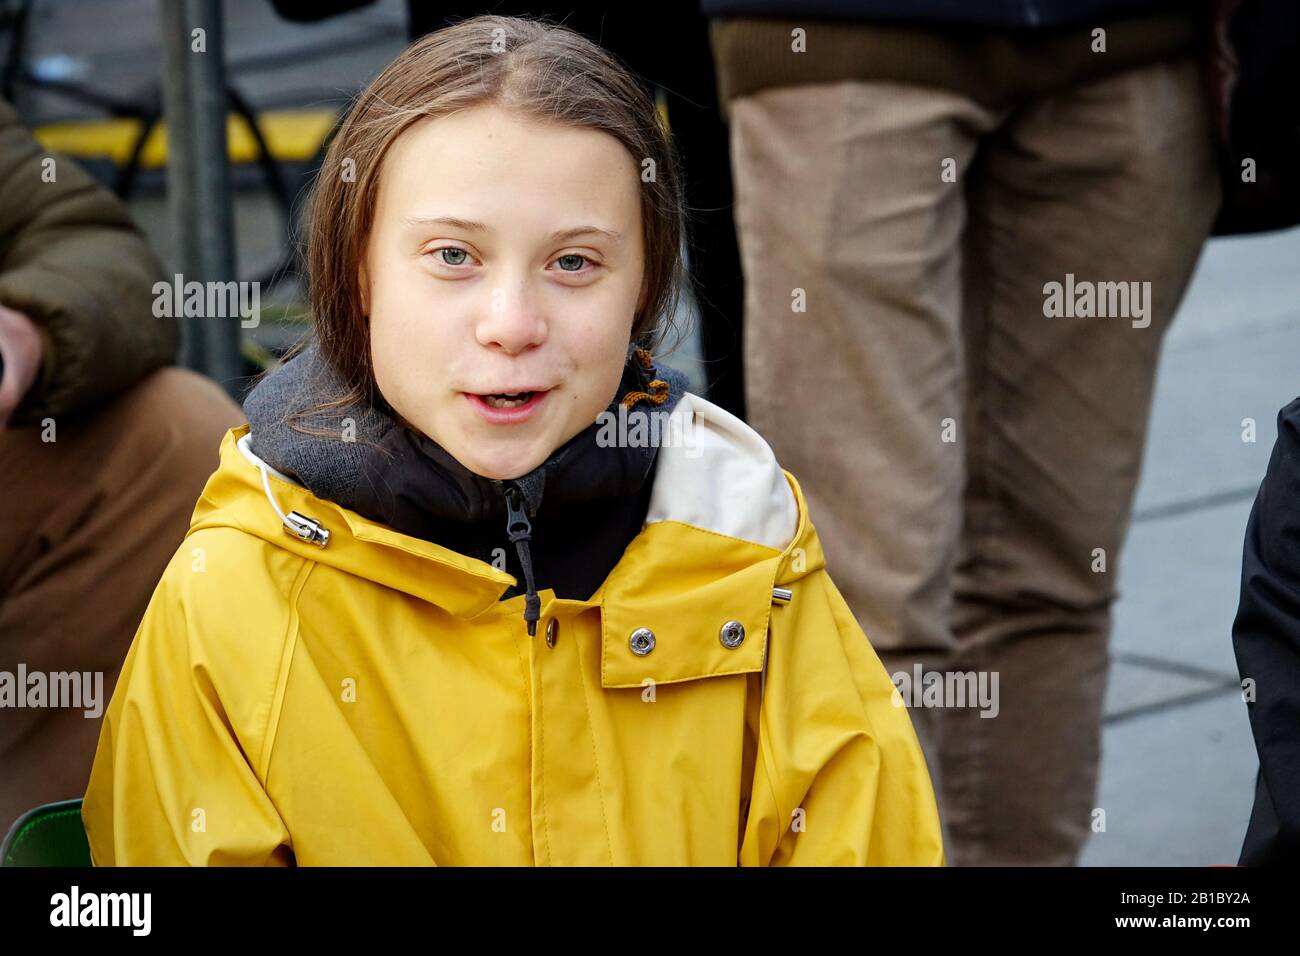 Greta Thunberg bei der Veranstaltung "Fridays For Future" in Turin. Turin, Italien - Dezember 2019 Stockfoto